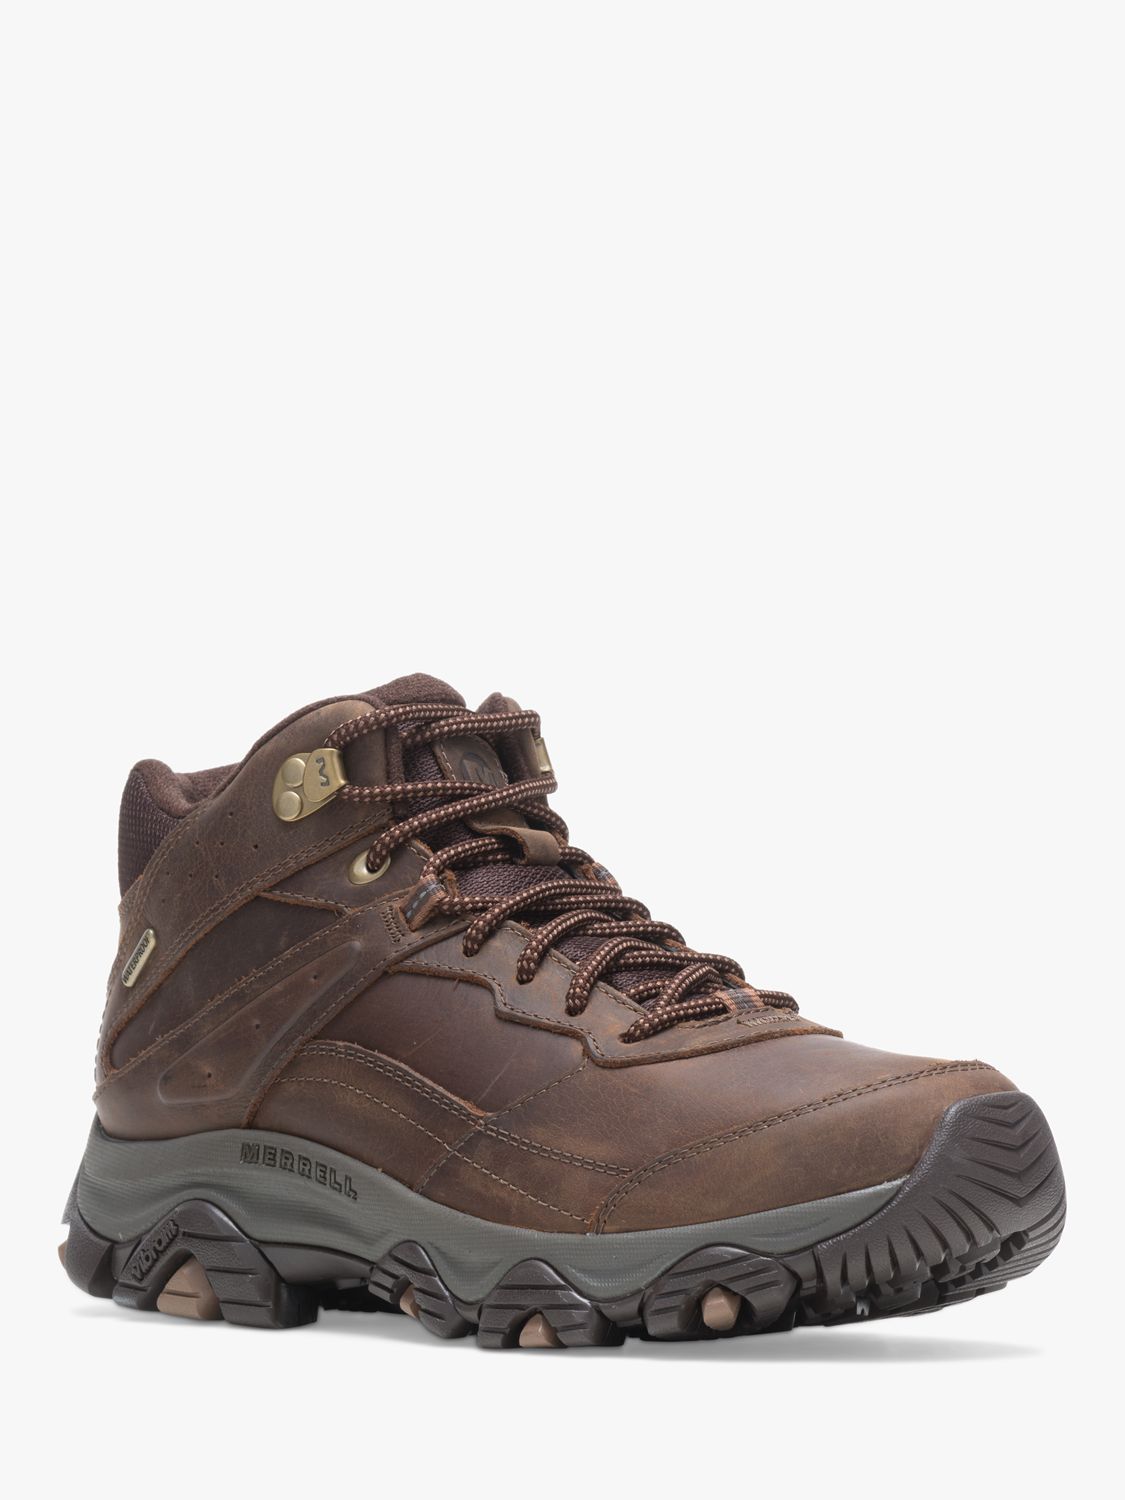 Buy Merrell MOAB Adventure 3 Mid Waterproof Men's Hiking Shoes Online at johnlewis.com